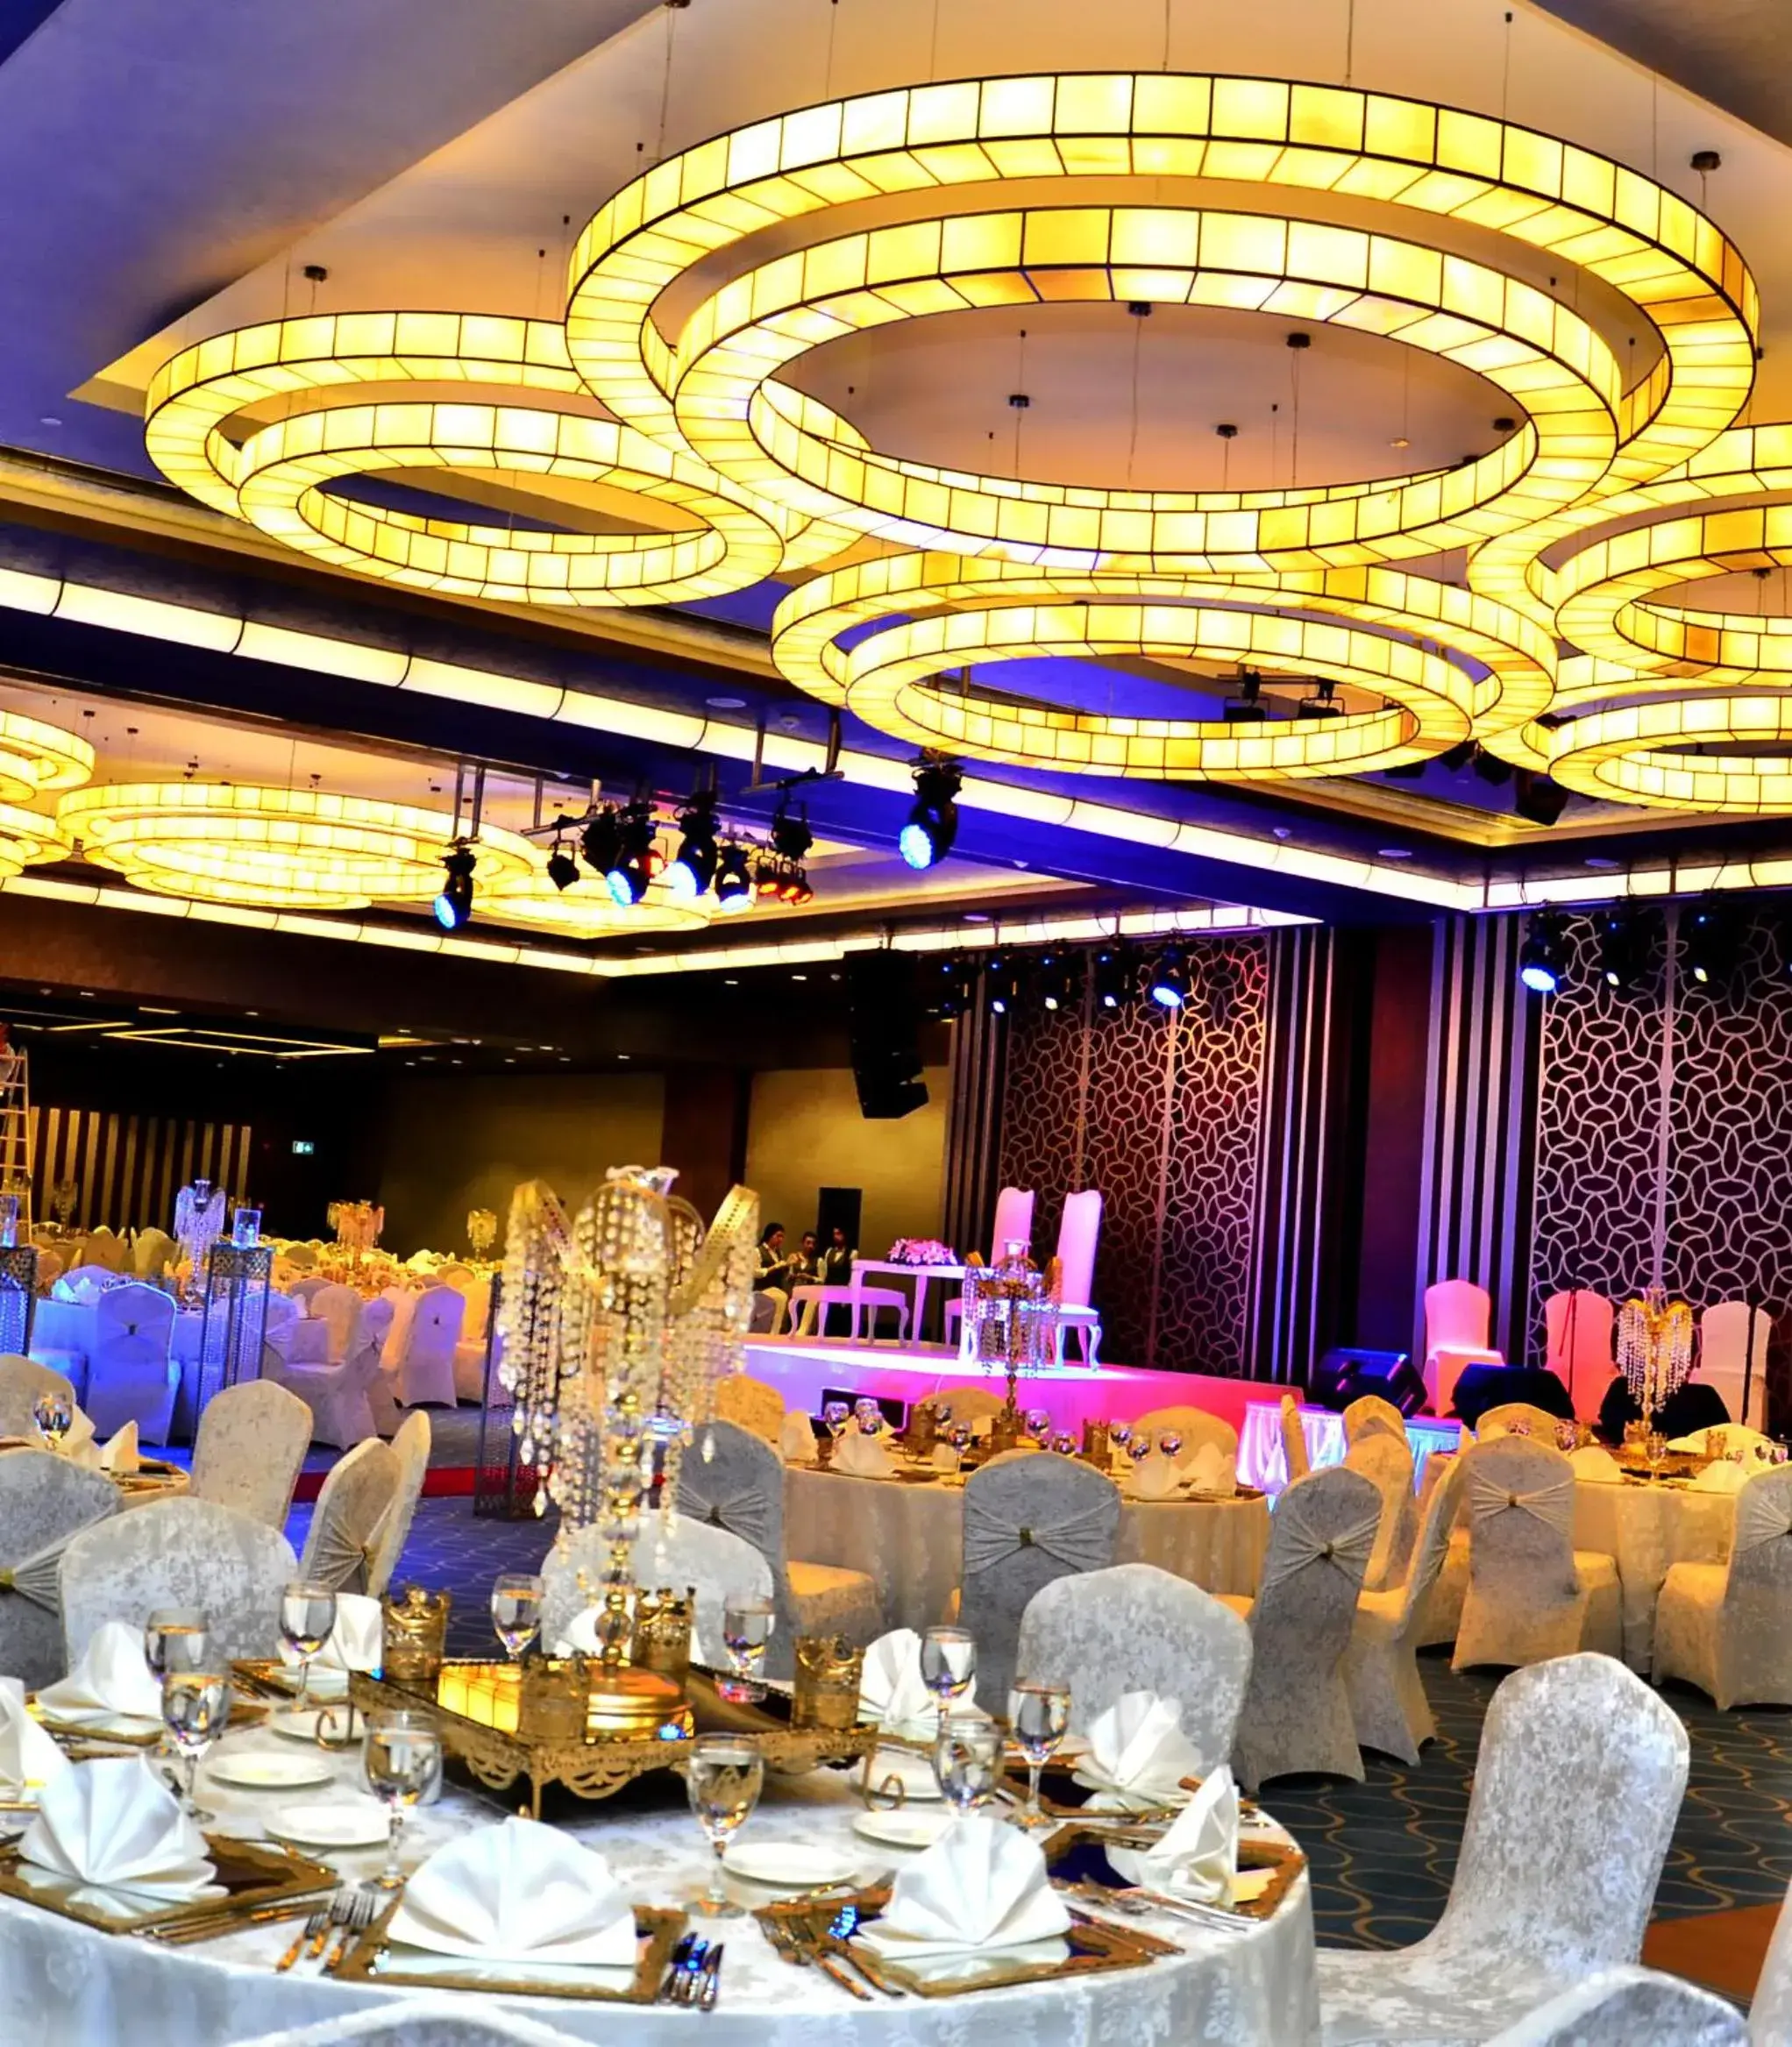 Banquet/Function facilities, Banquet Facilities in Royal Stay Palace Hotel